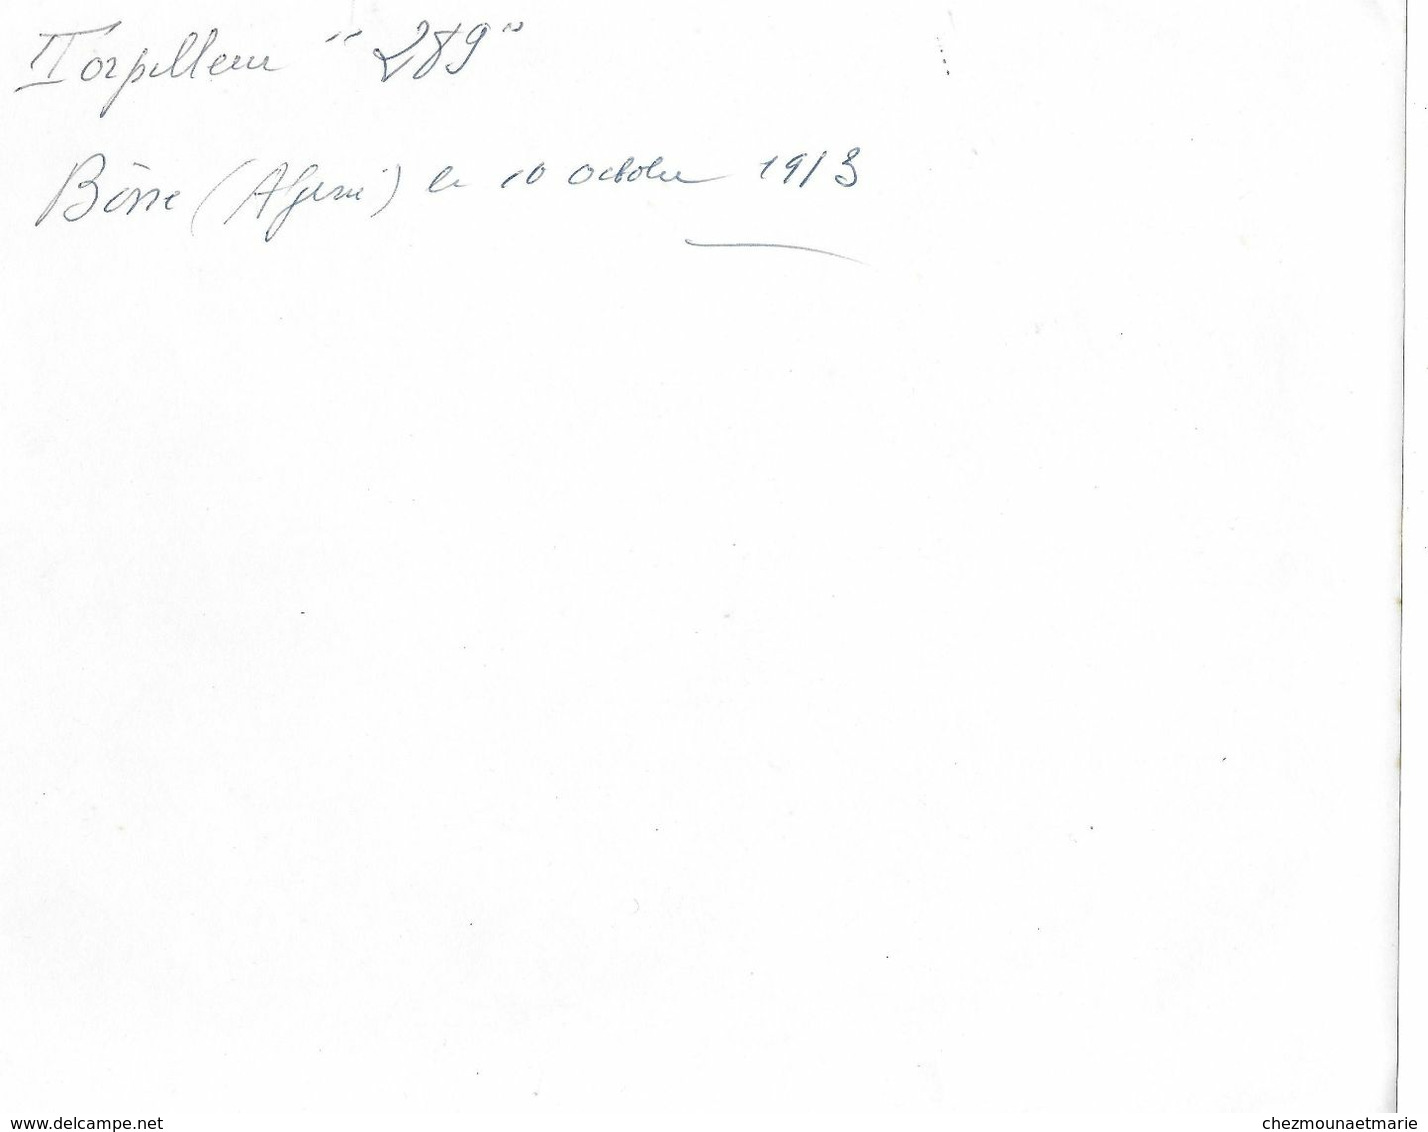 TORPILLEUR 289 BONE ALGERIE OCTOBRE 1913 - PHOTO - Barcos